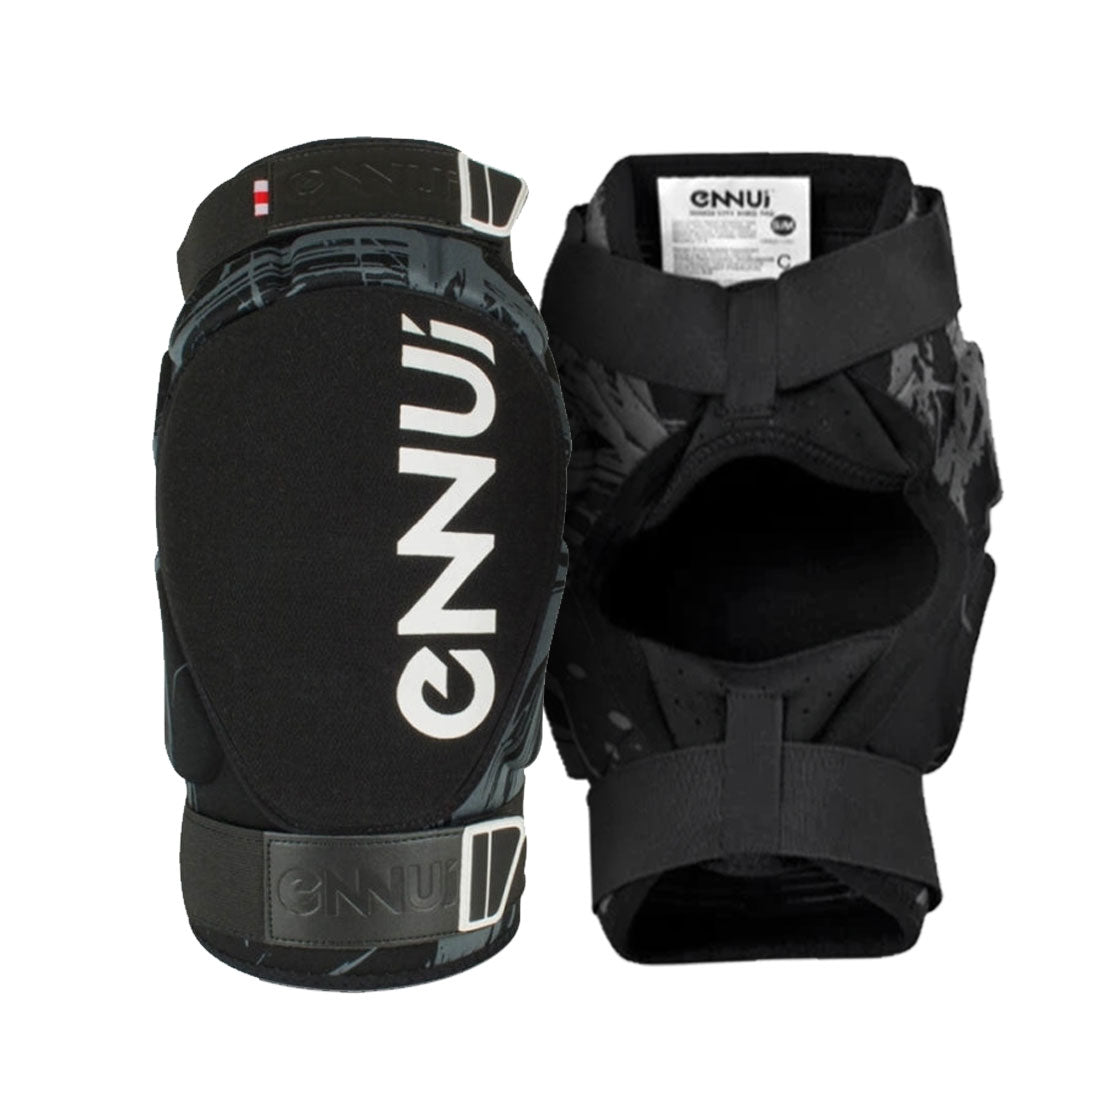 Ennui City Knee Gasket Protective Gear